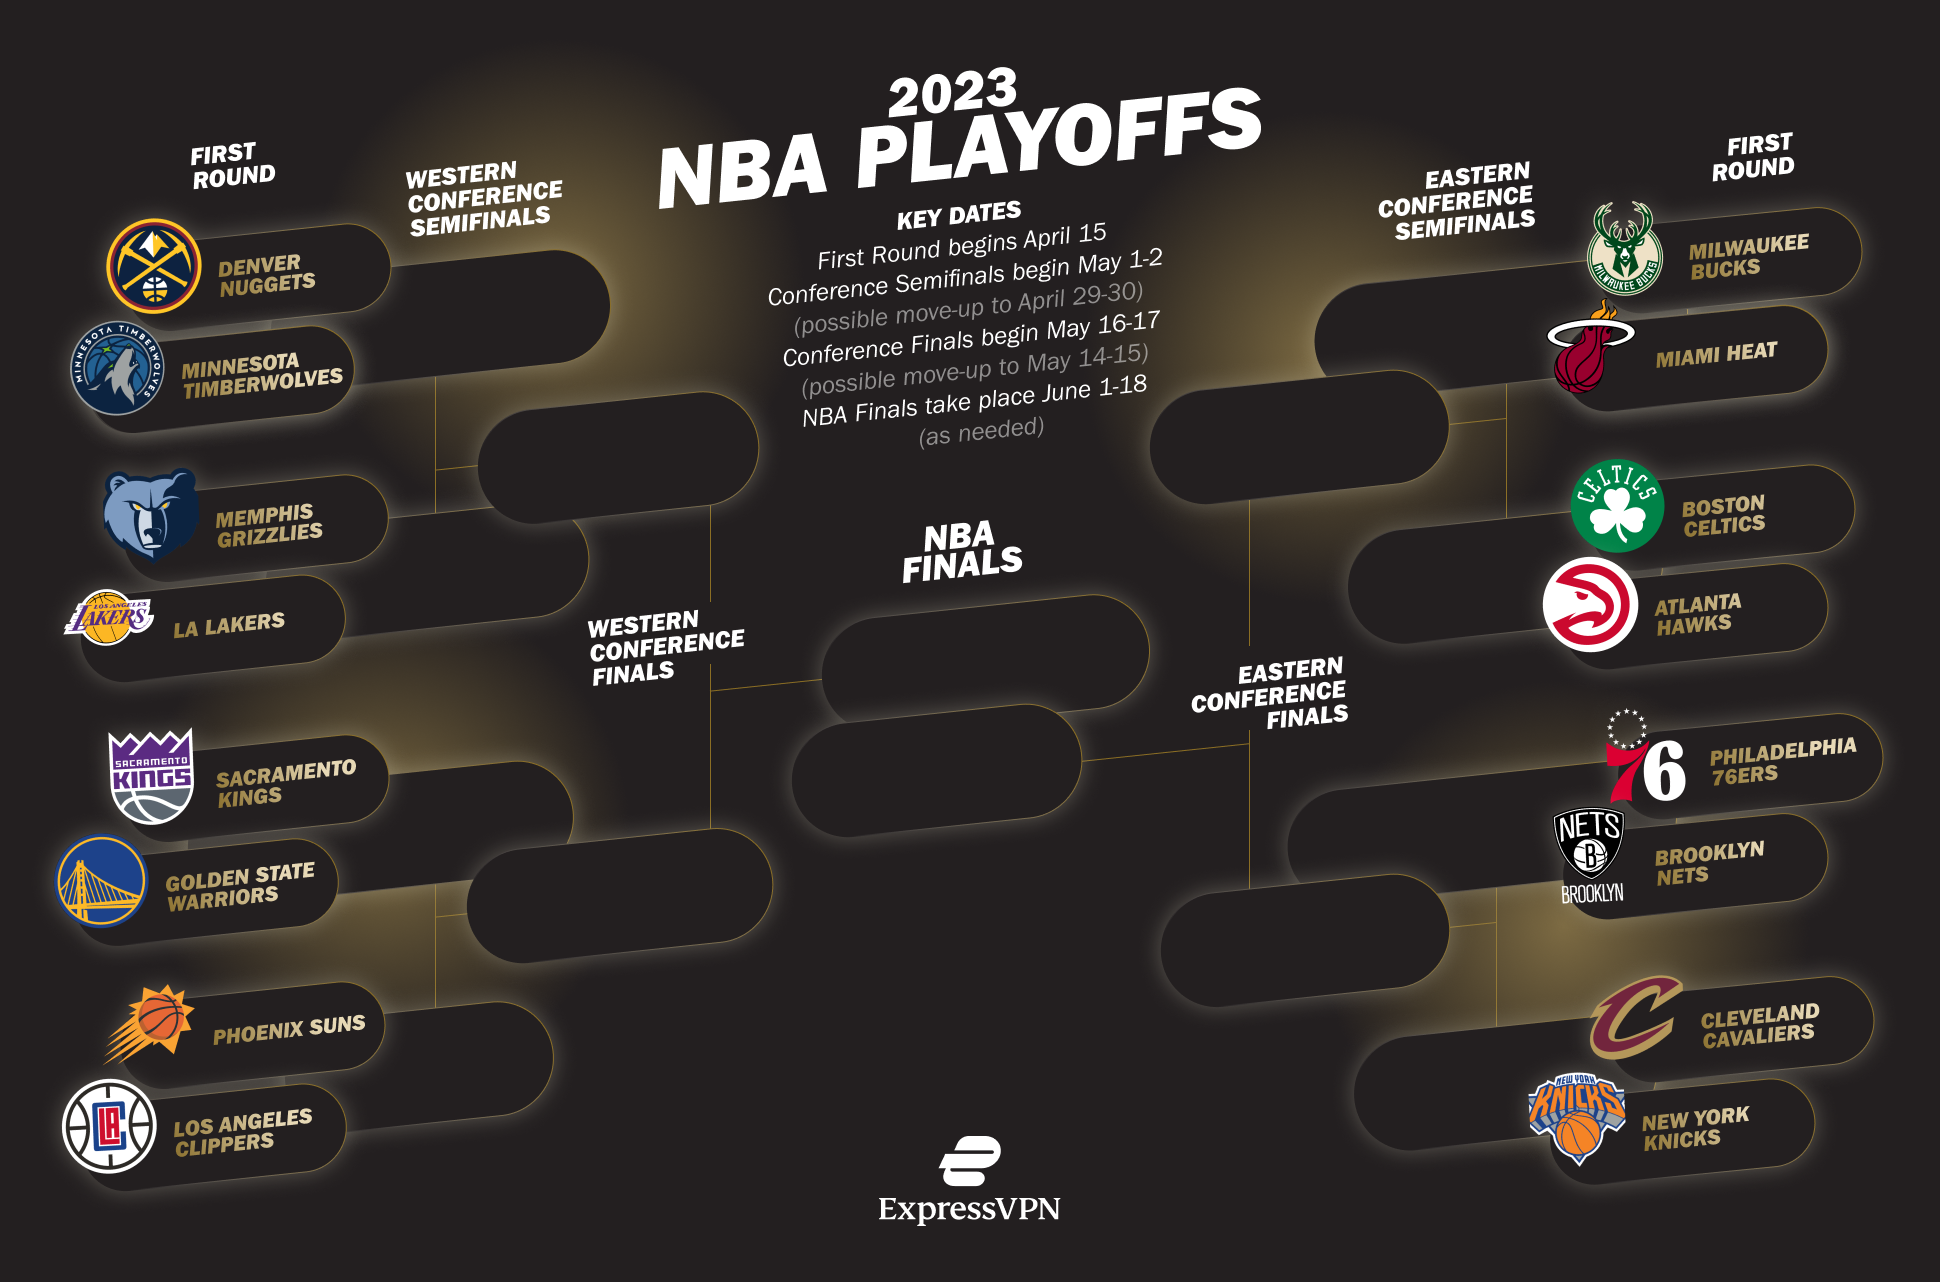 NBA Playoffs bracket 2023: Full schedule, TV channels, scores for